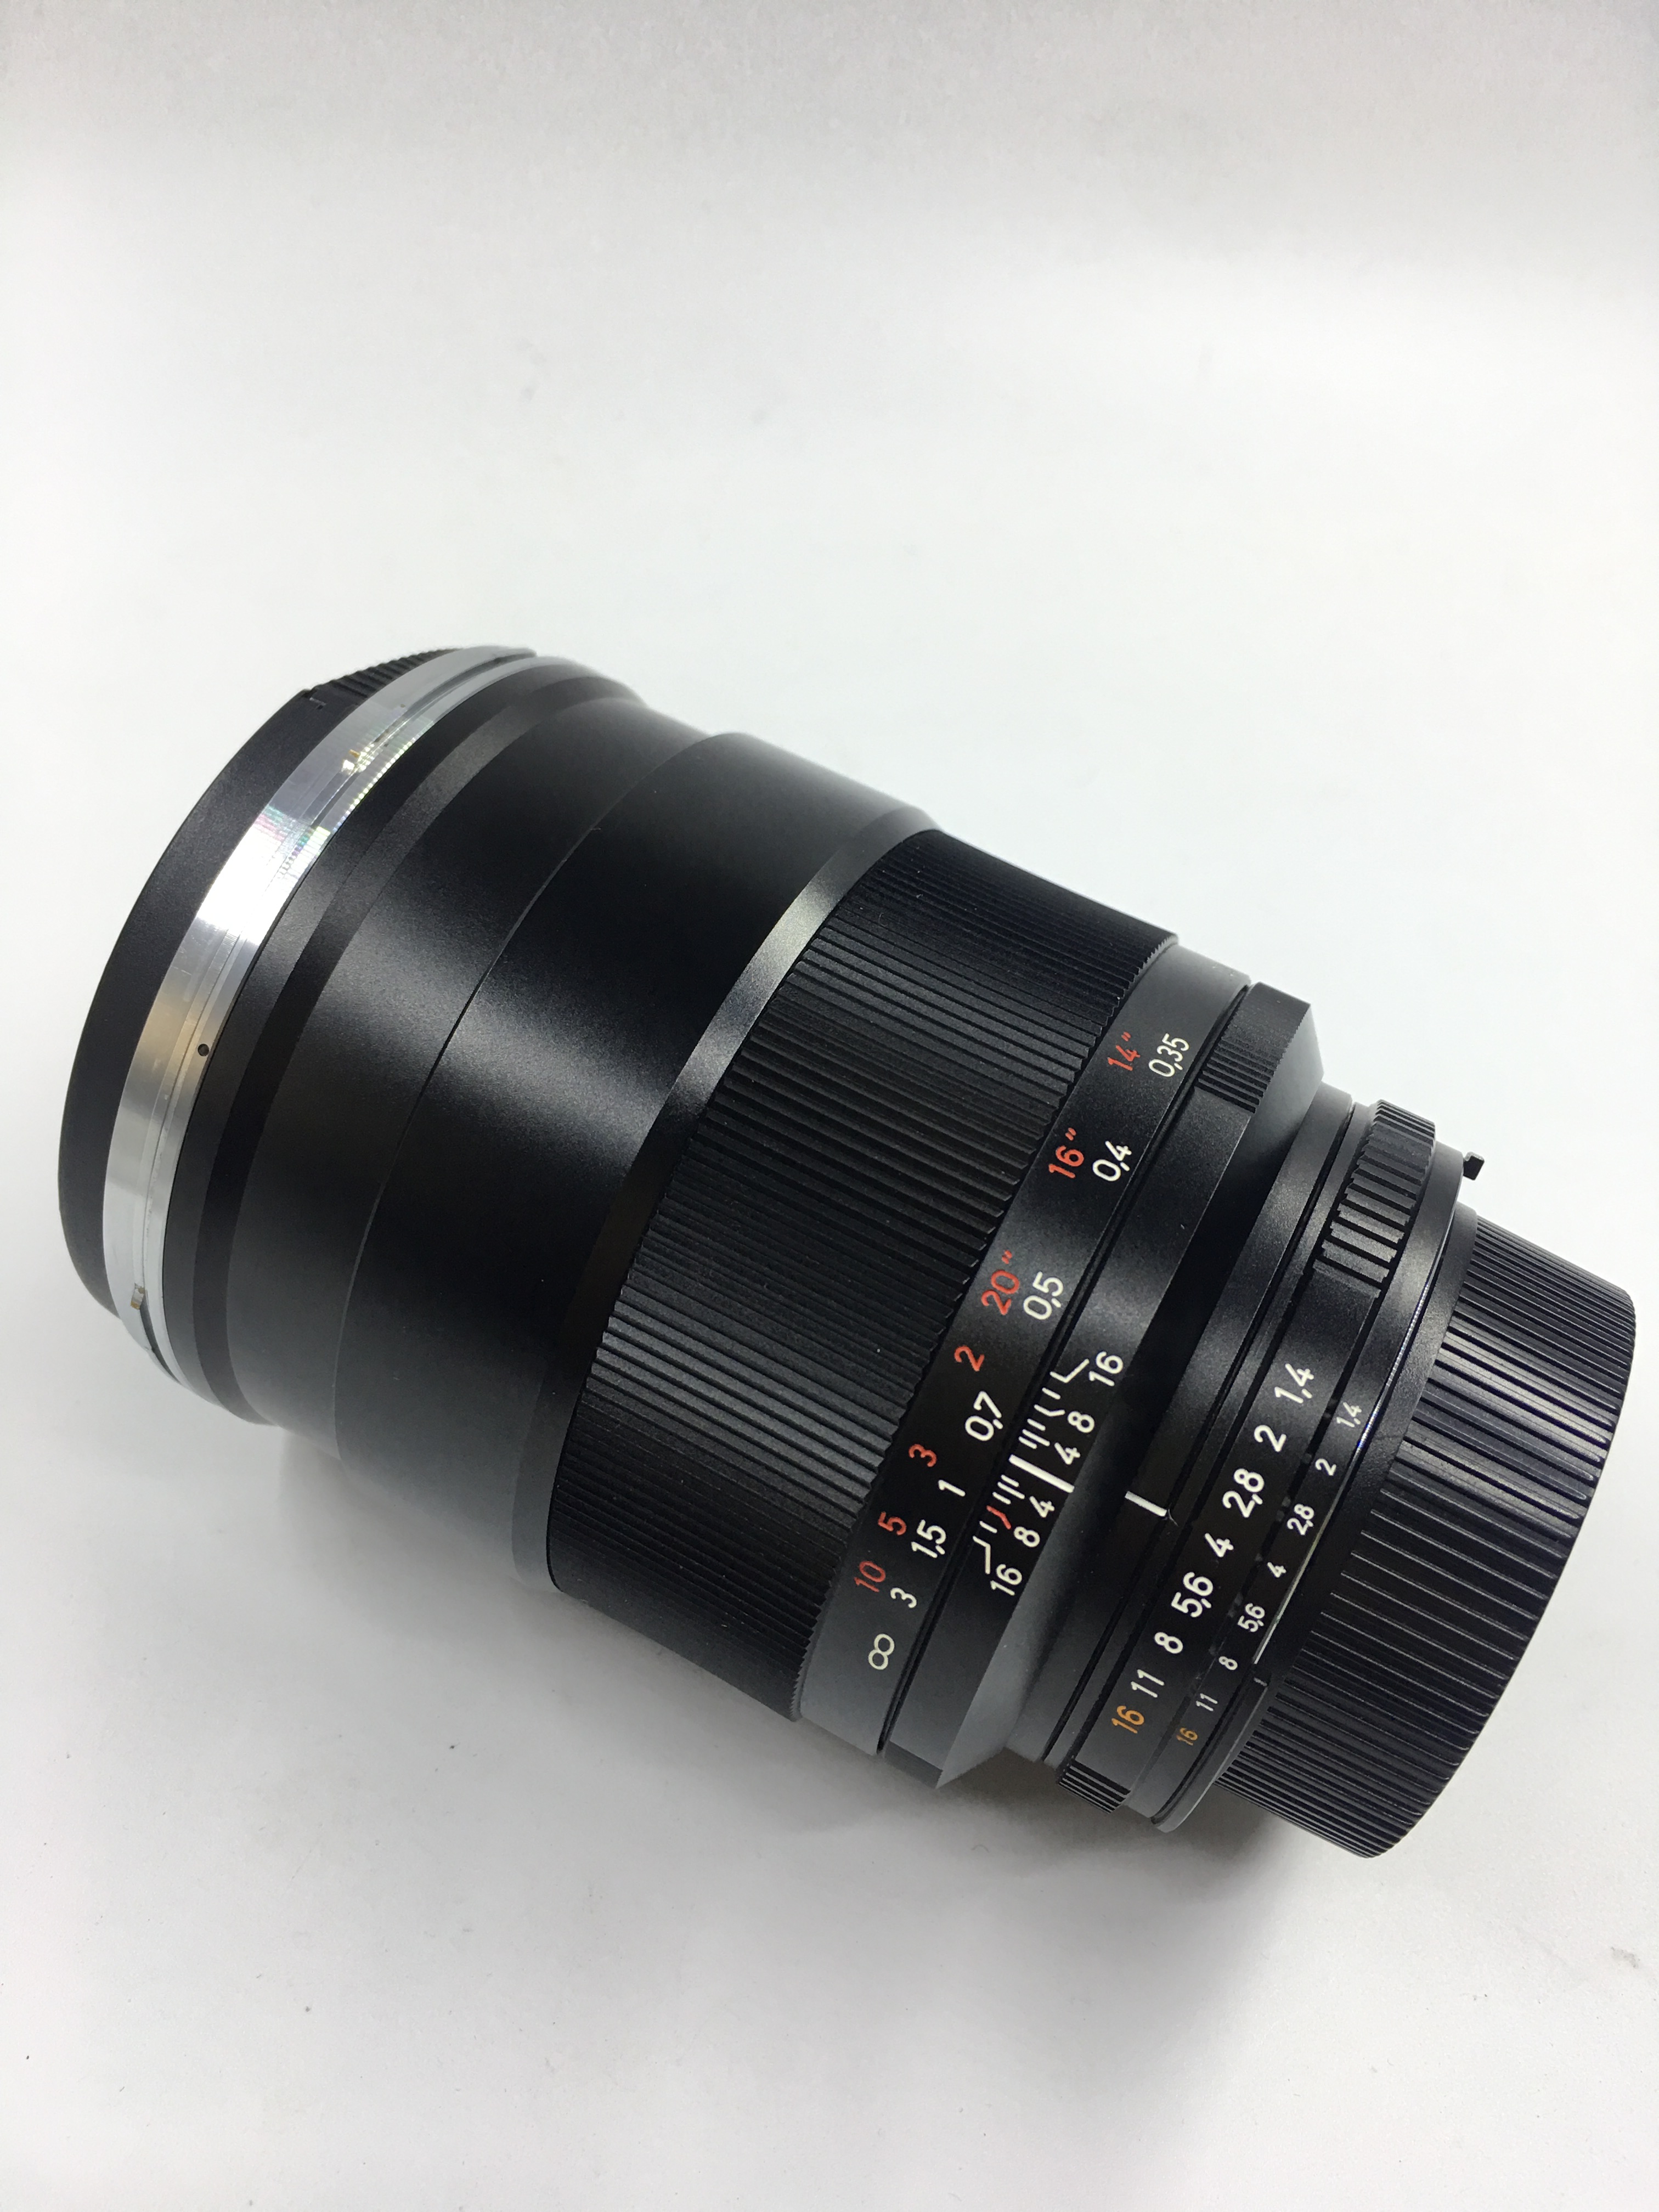  [Sold] Good quality ZEISS Distagon T * 35 F1.4 ZF. 2 Nikon port # 8872